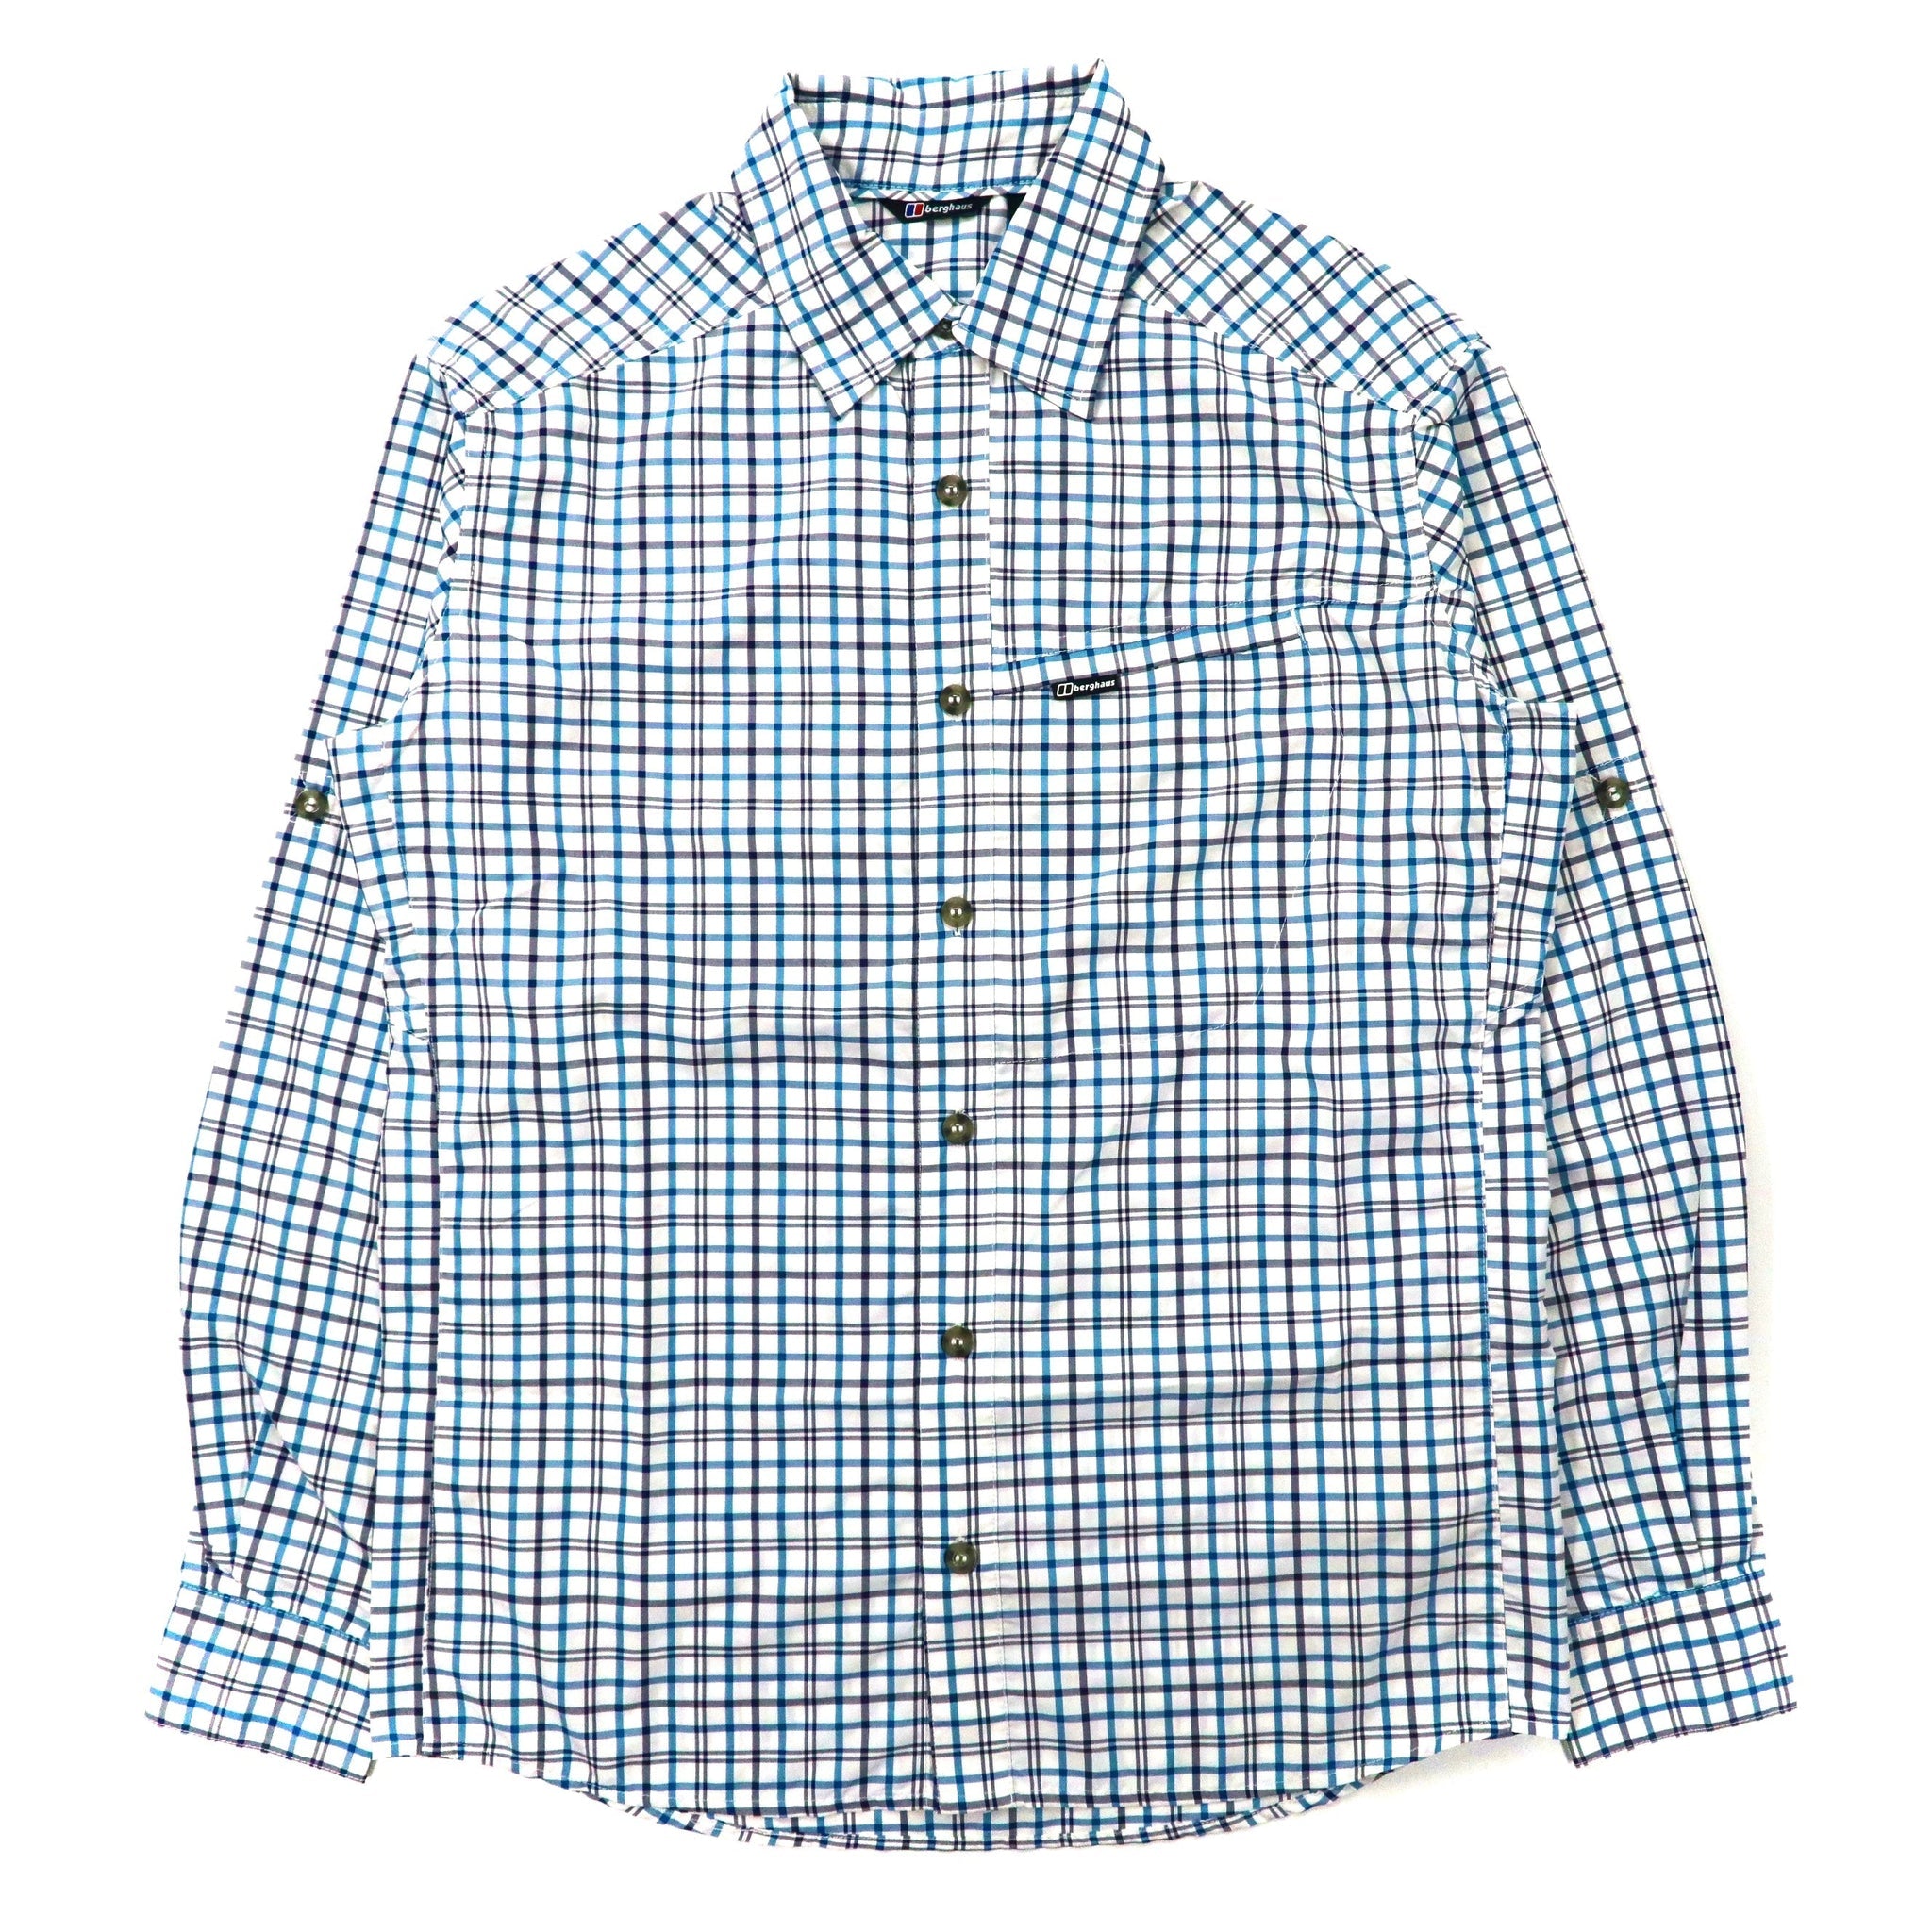 berghaus チェックシャツ S ブルー ポリエステル CHECKED SHIRT LS 20799